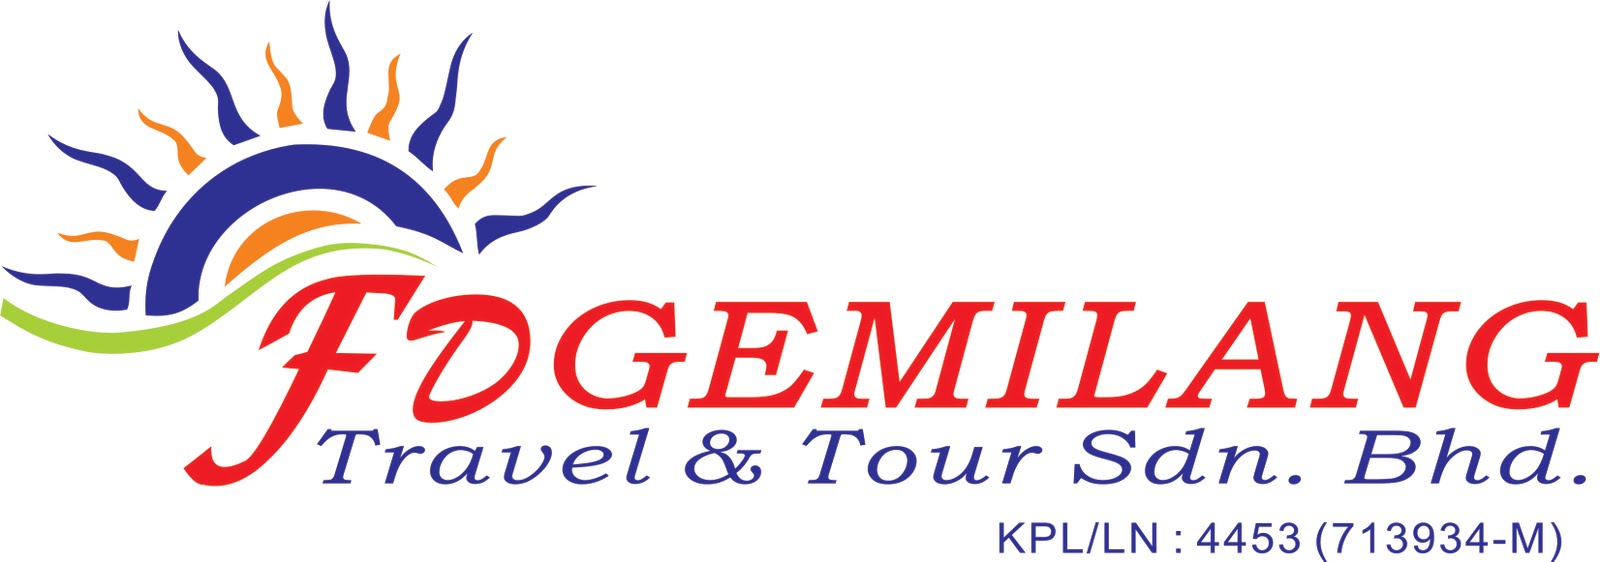 FD Gemilang Travel & Tour